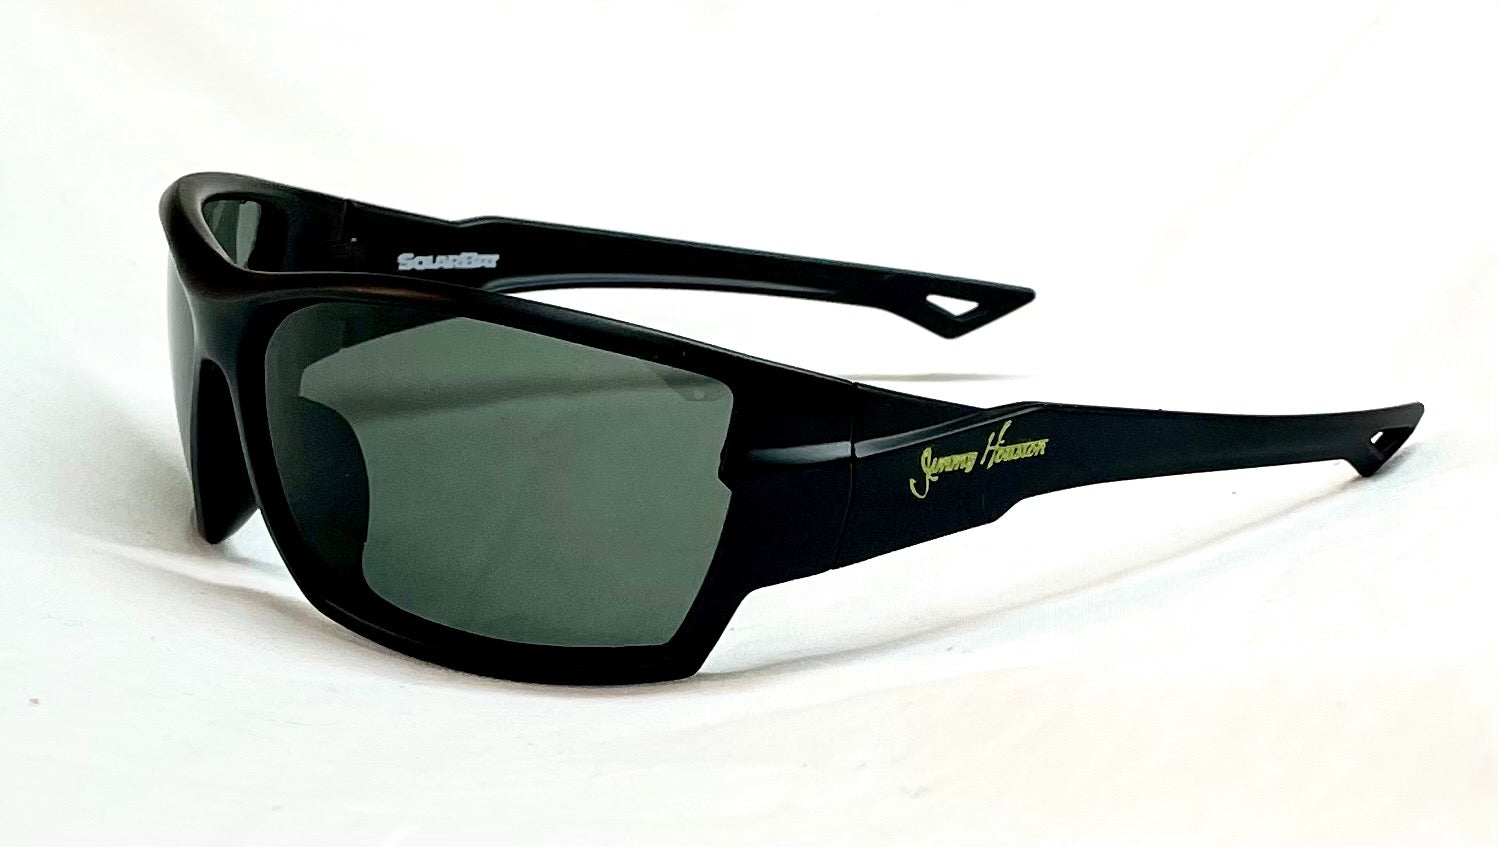 Solar Bat Sunglasses - Performance Polarized Floating Bat 1 - Gray Accent